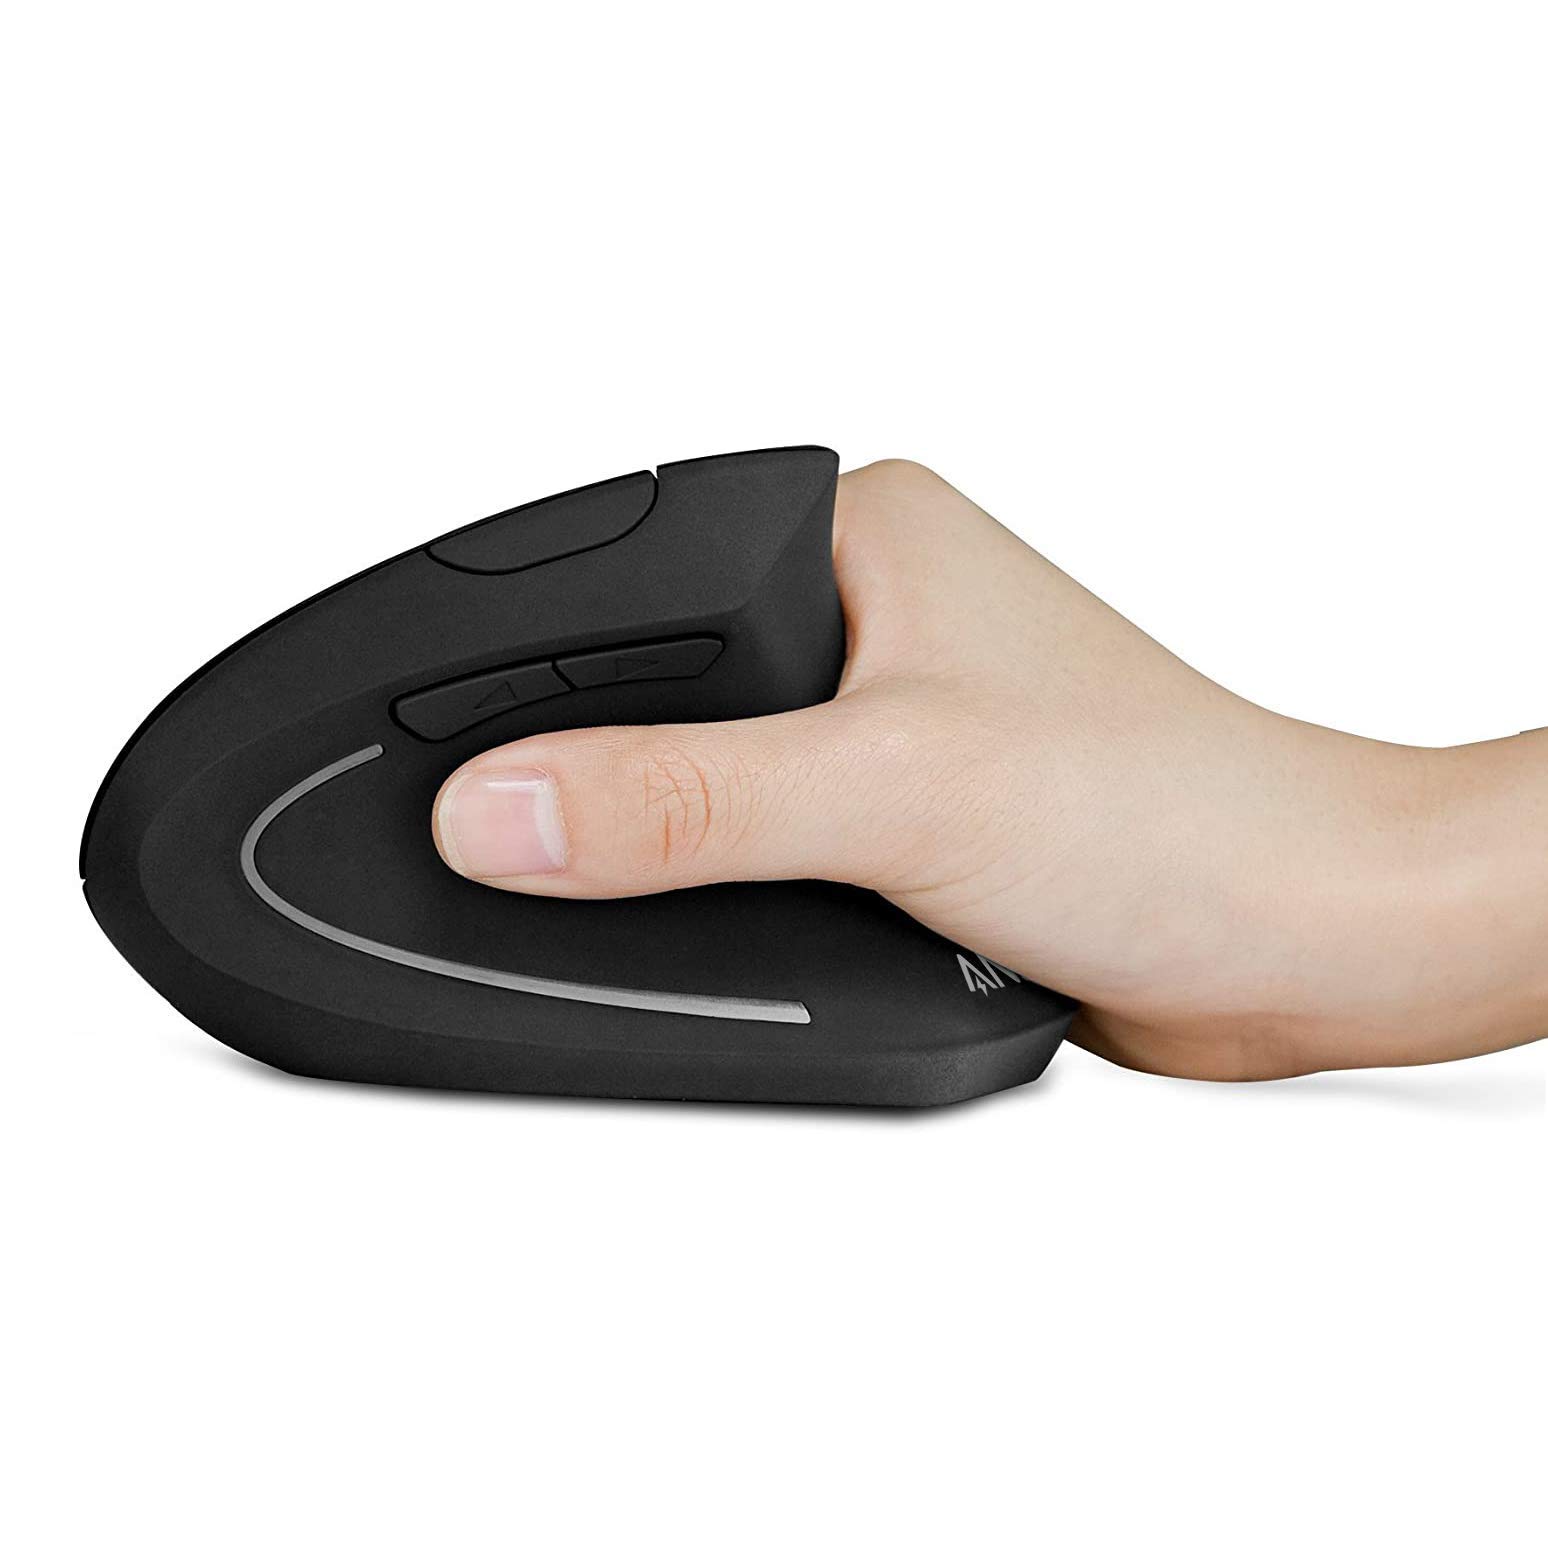 Anker 2.4G Wireless Vertical Ergonomic Optical Mouse & Anker Rechargeable Wireless Keyboard (Black)